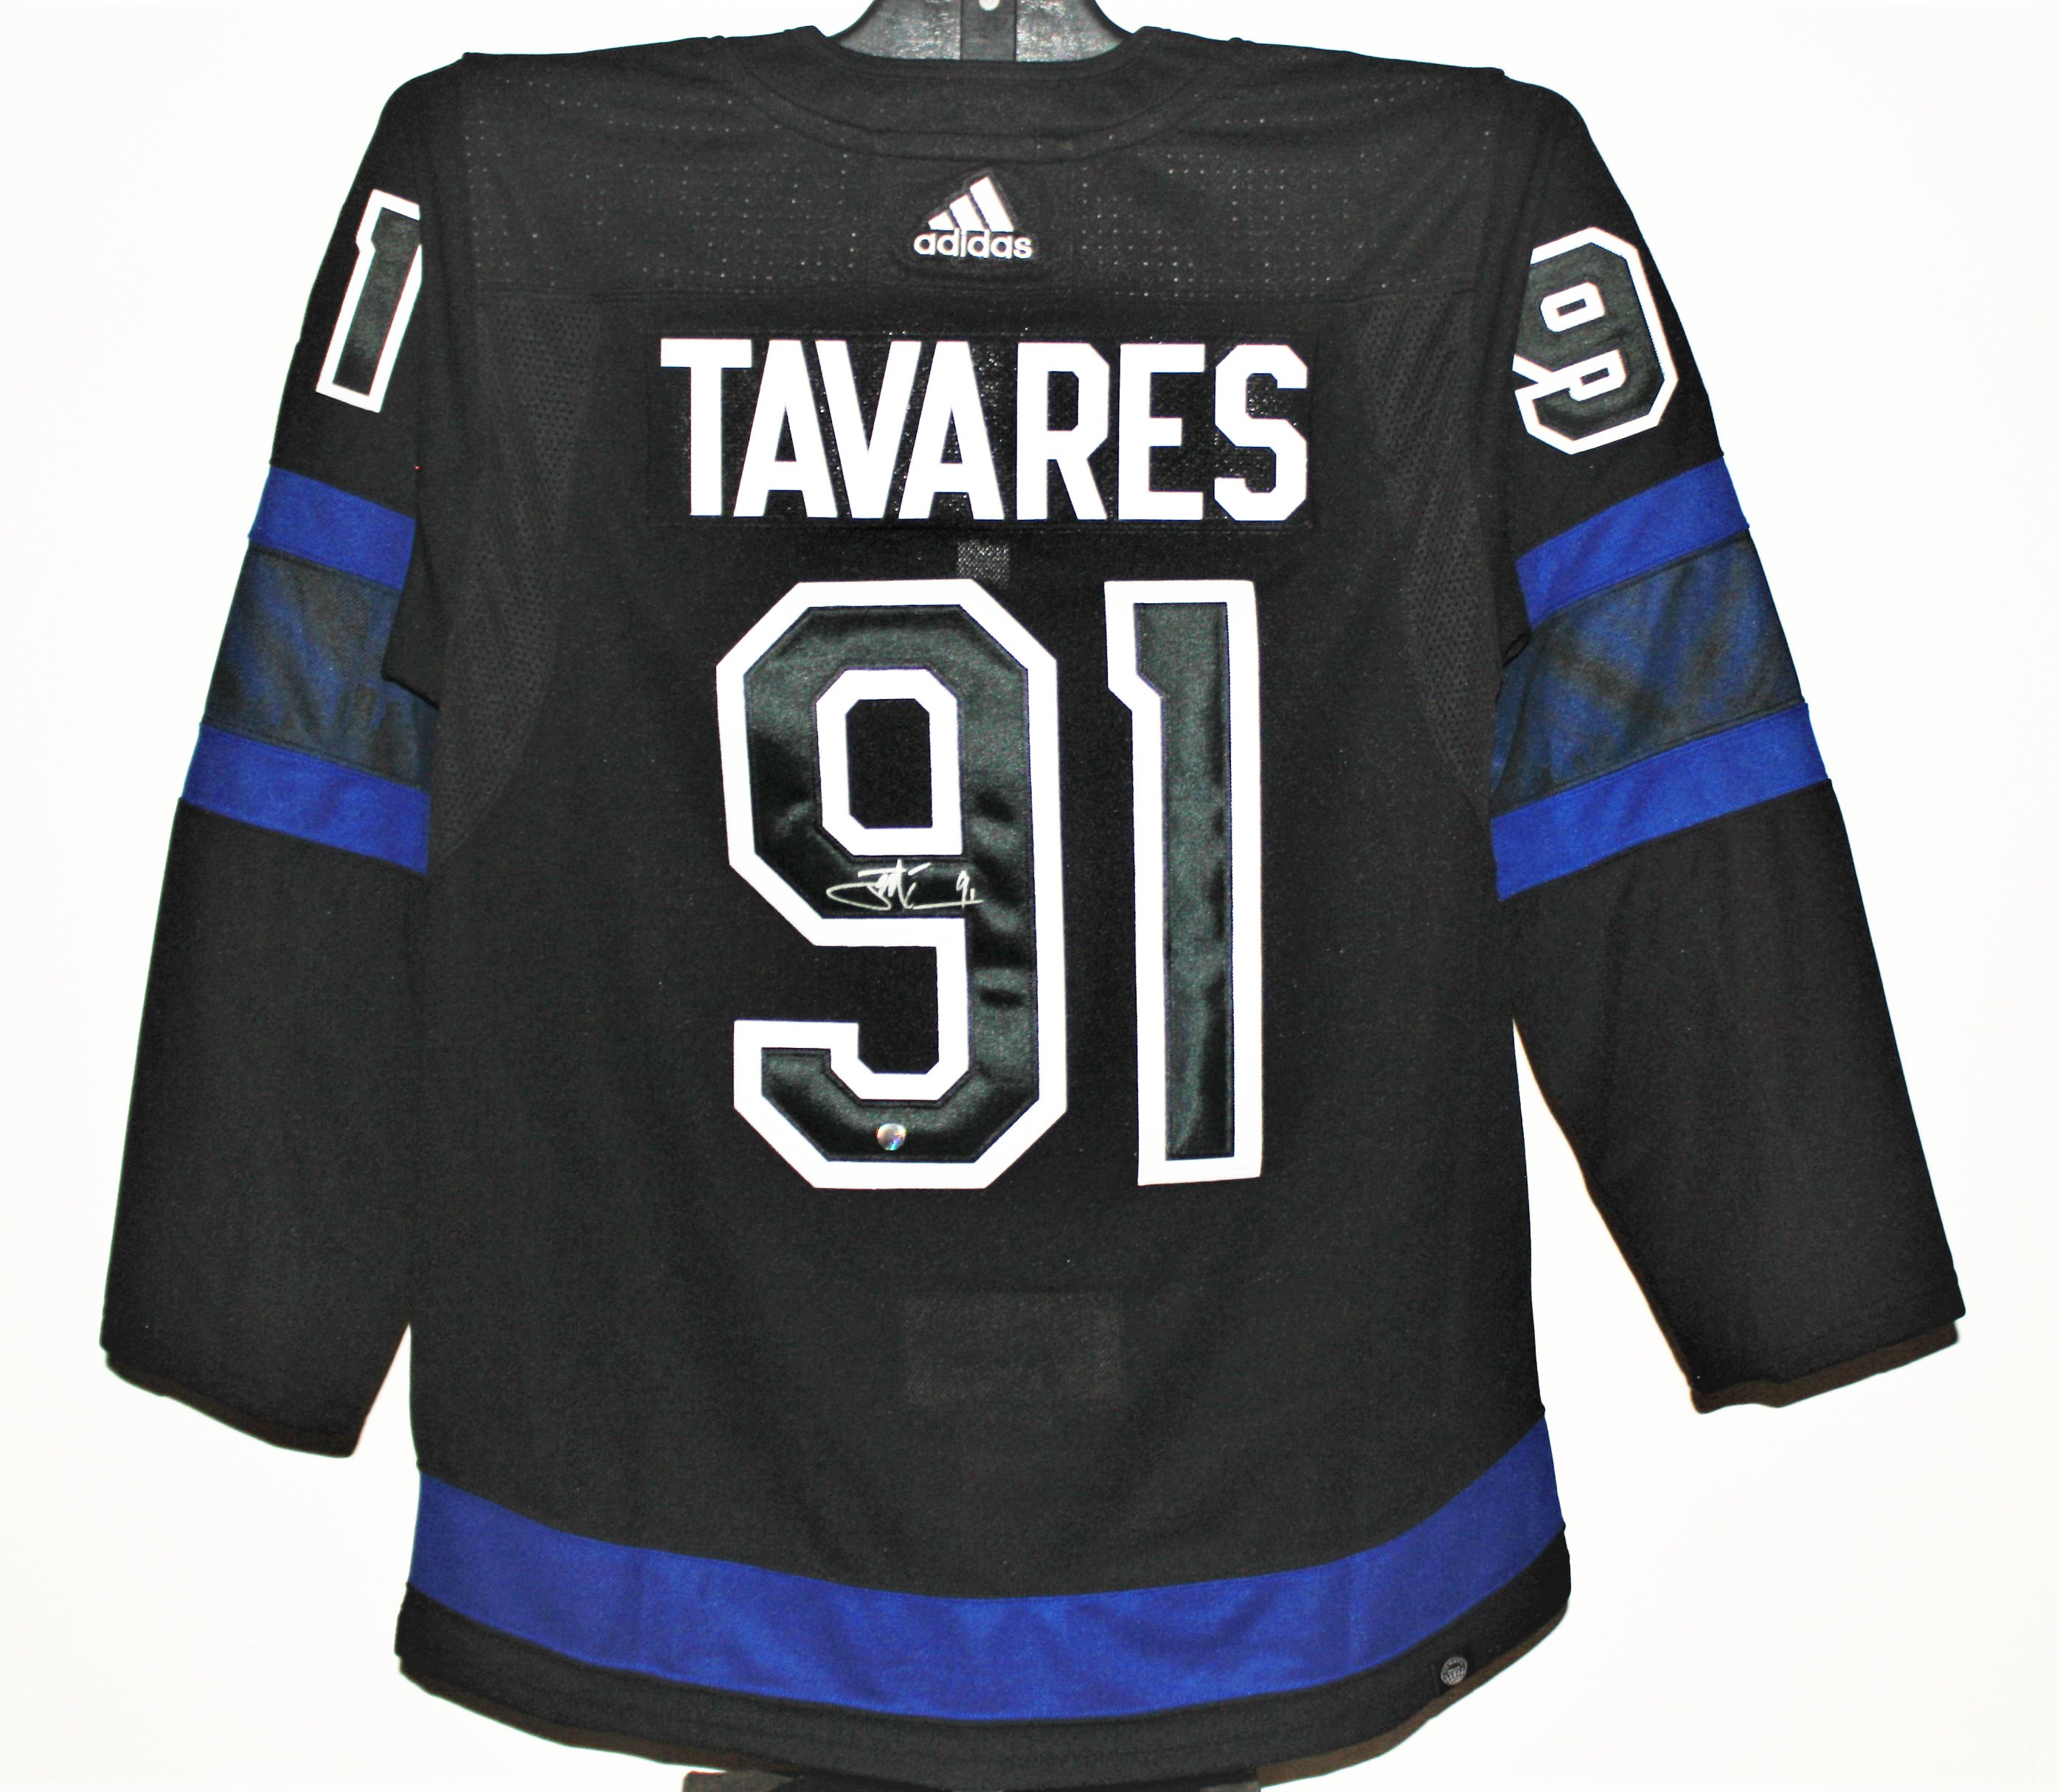 John Tavares autographed Jersey (New York Islanders)